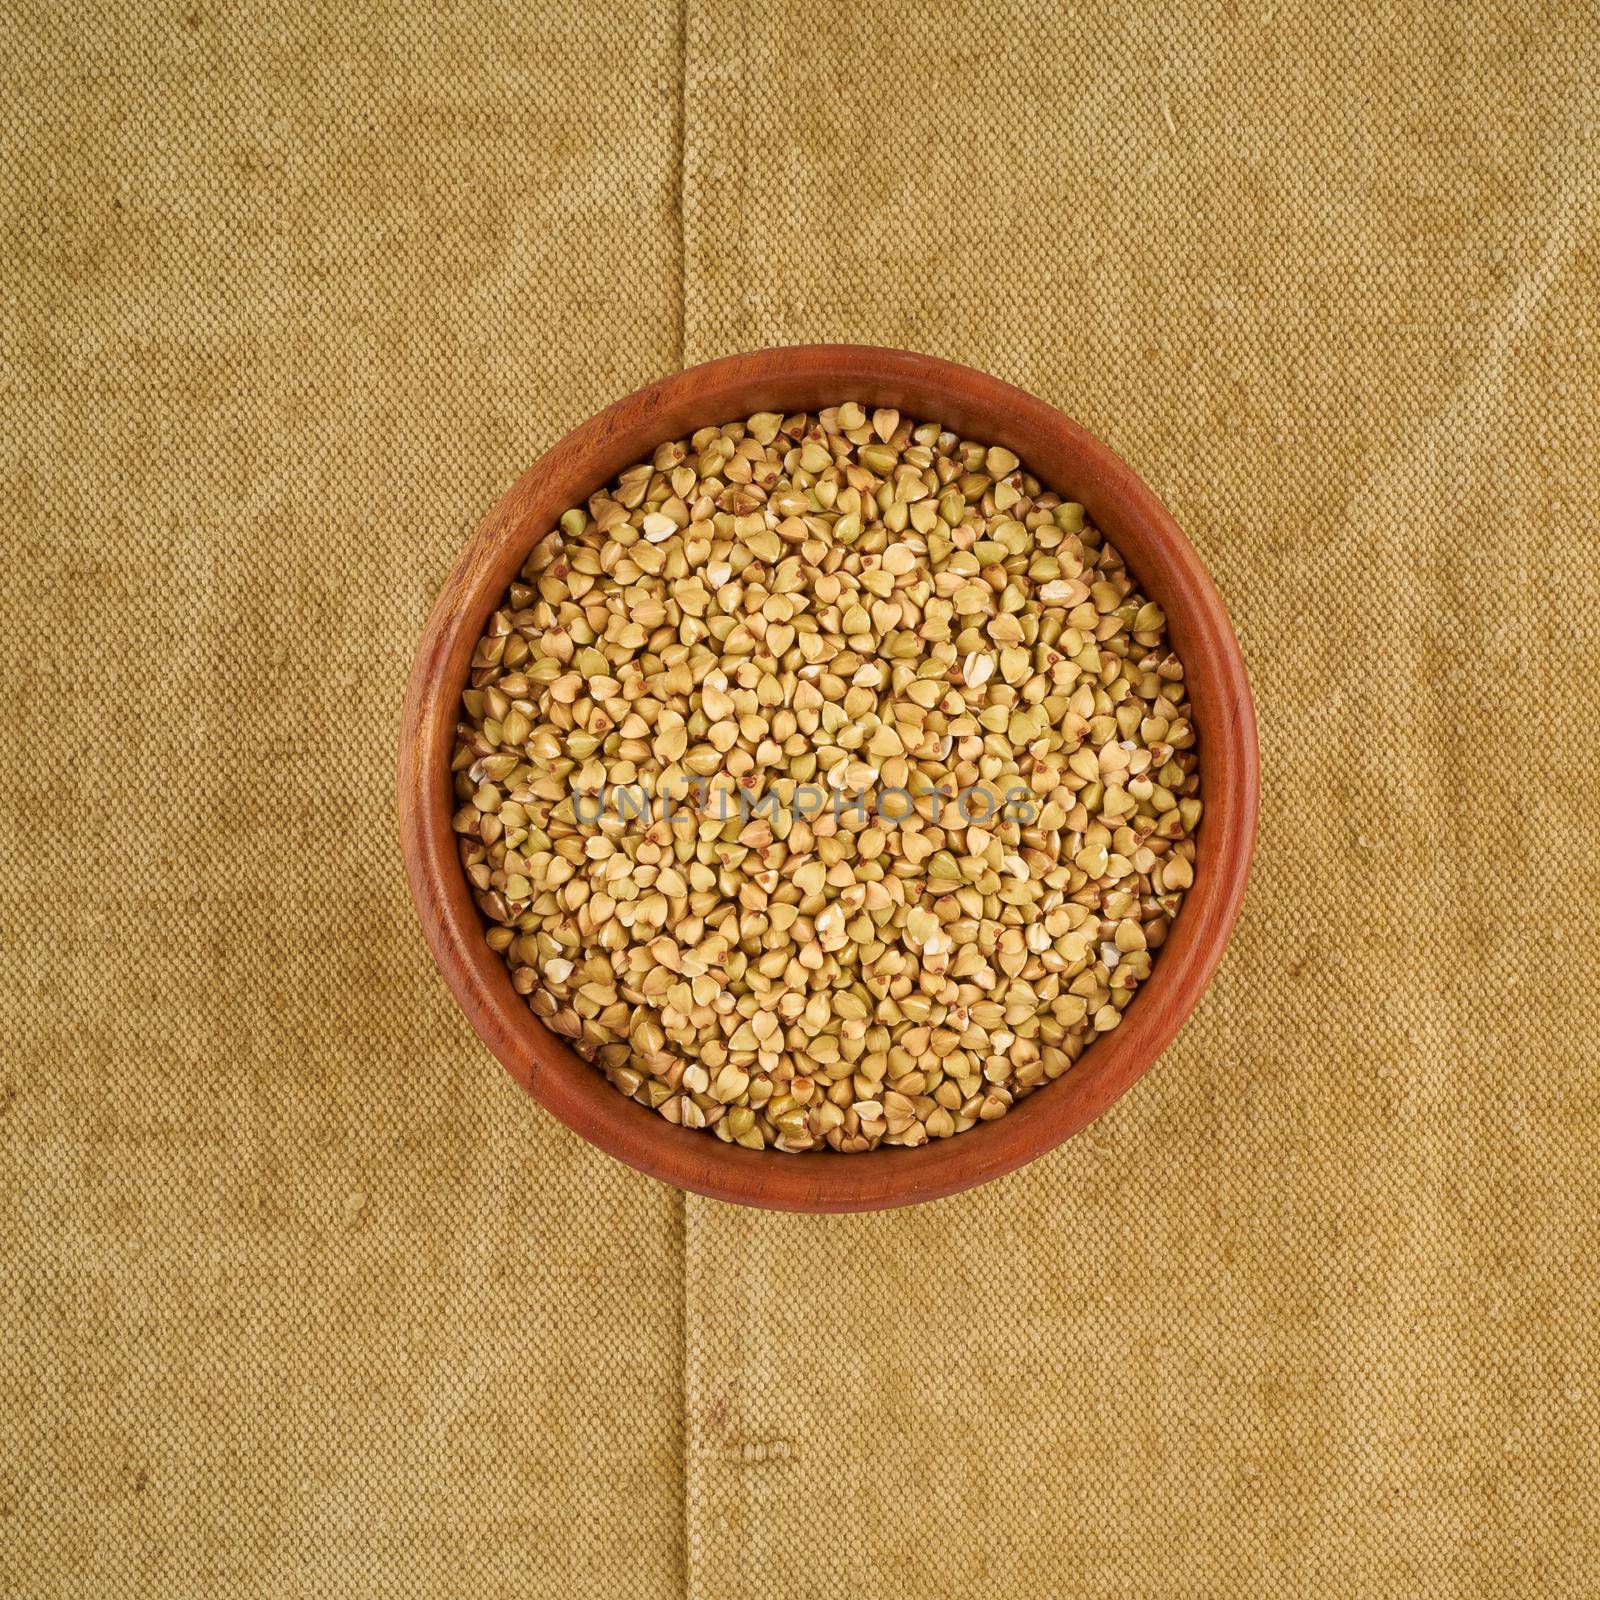 green buckwheat in wooden bowl on old linen napkin, gluten free wholegrain, fodmap diet